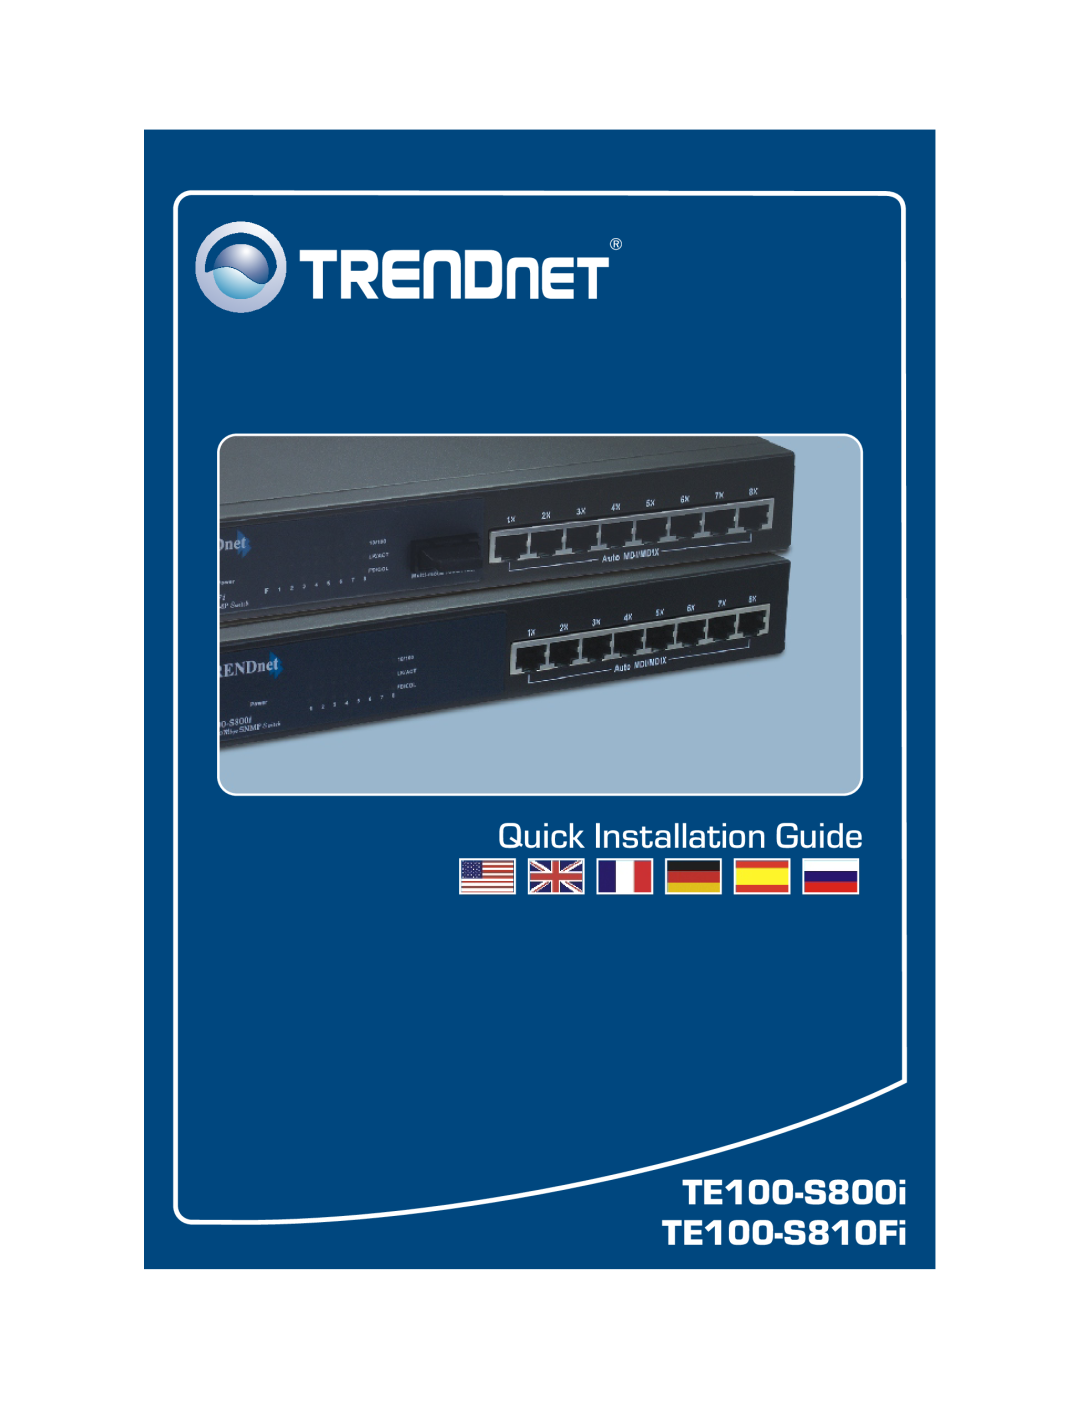 TRENDnet manual Quick Installation Guide, TE100-S800i TE100-S810Fi 